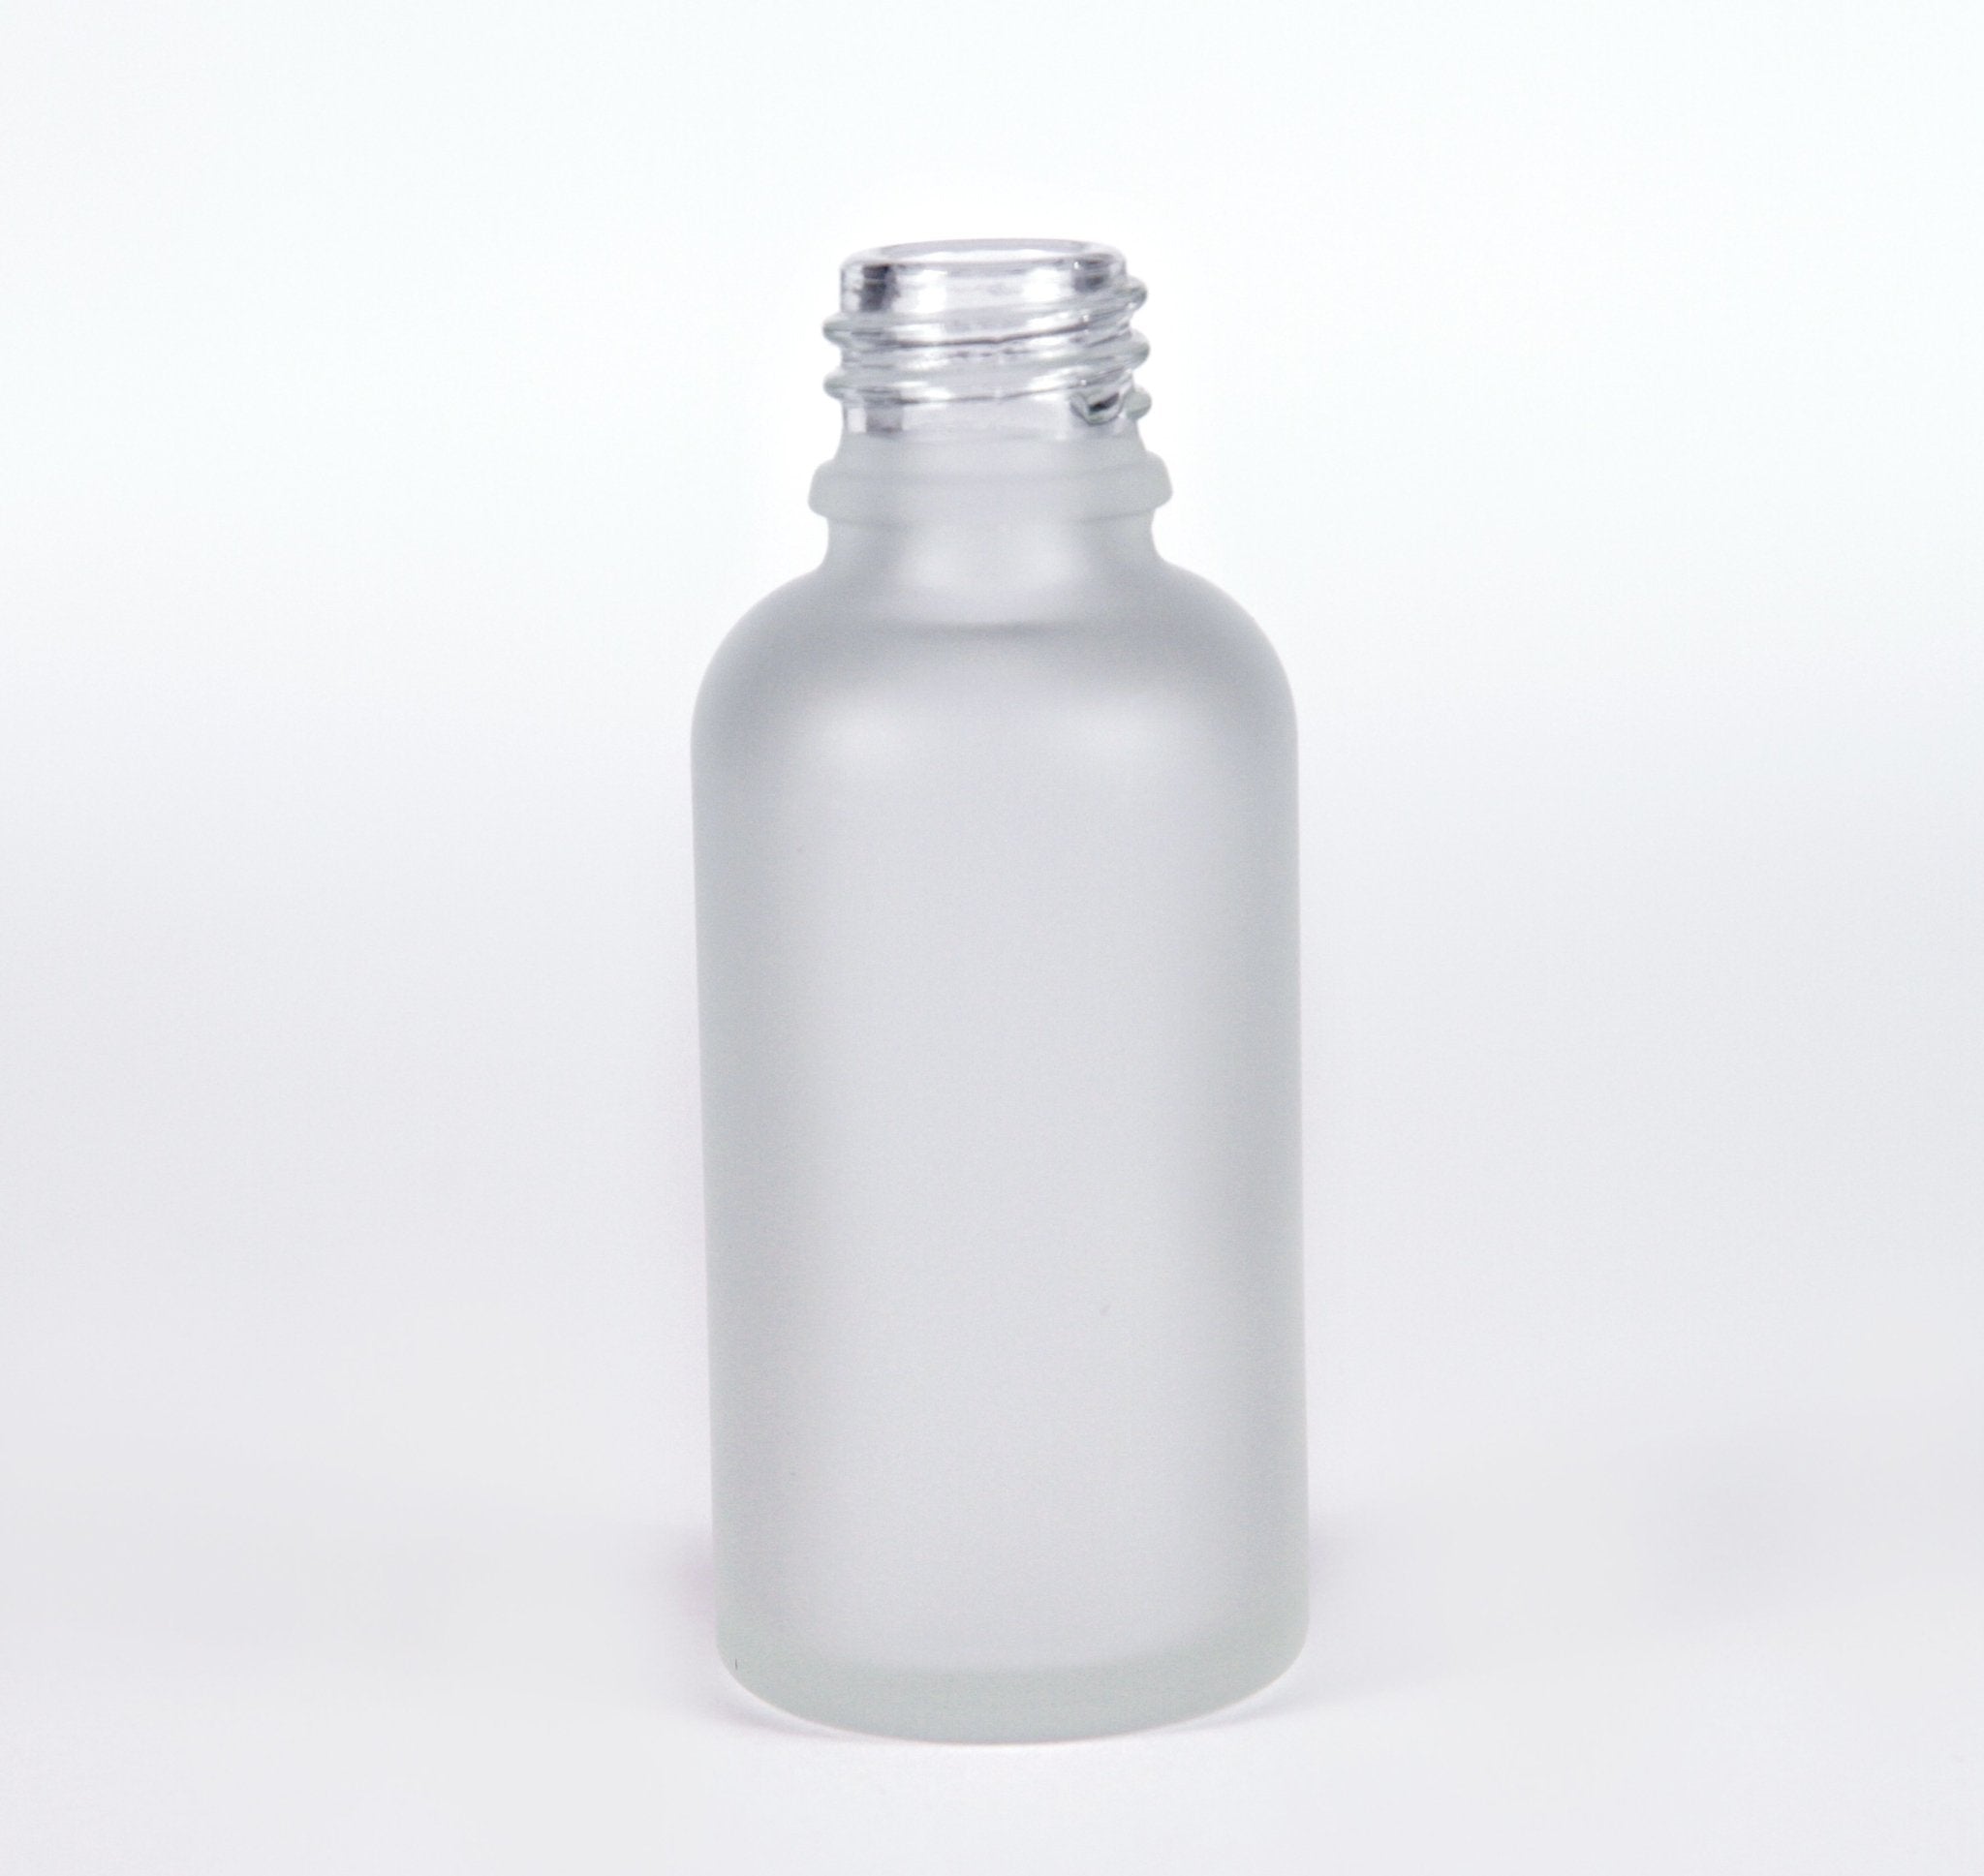 30ml Frosted Glass Bottle 18-415 neck - Cased 330 - Bottle Only - Rock Bottom Bottles / Packaging Company LLC